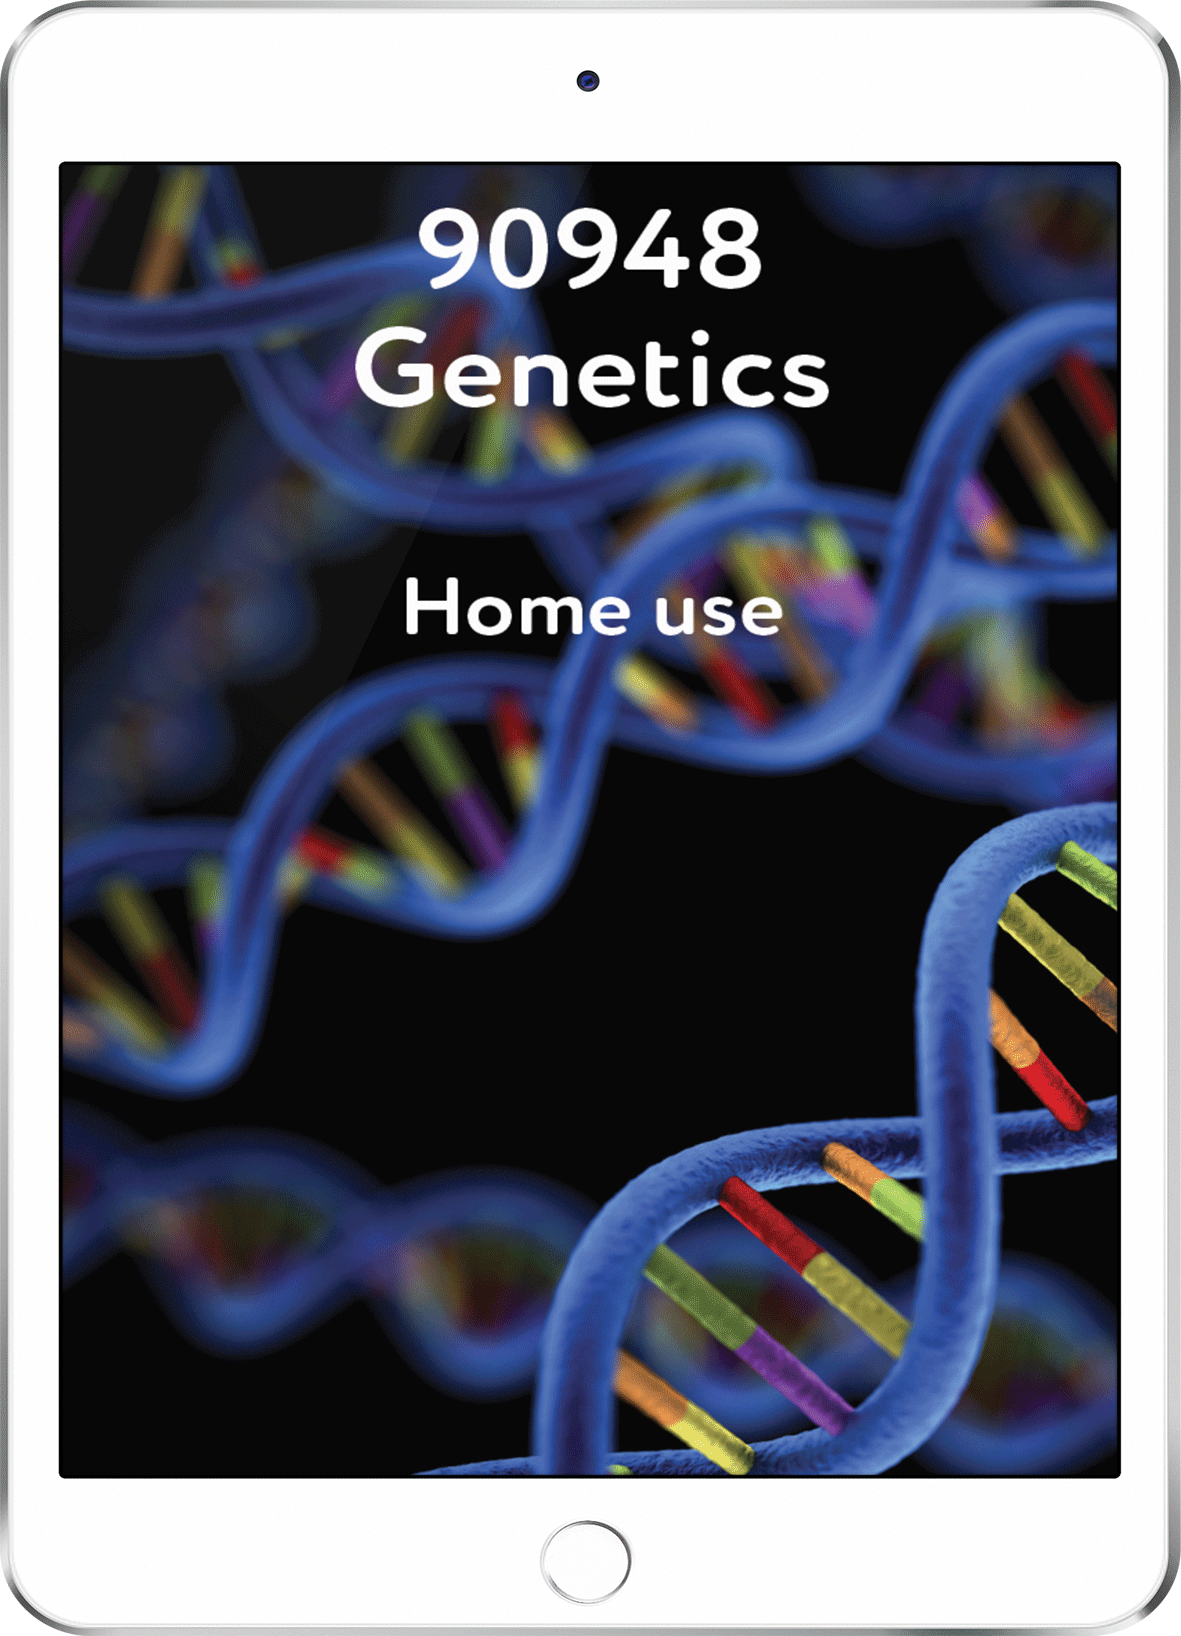 90948 Genetics - Home Use